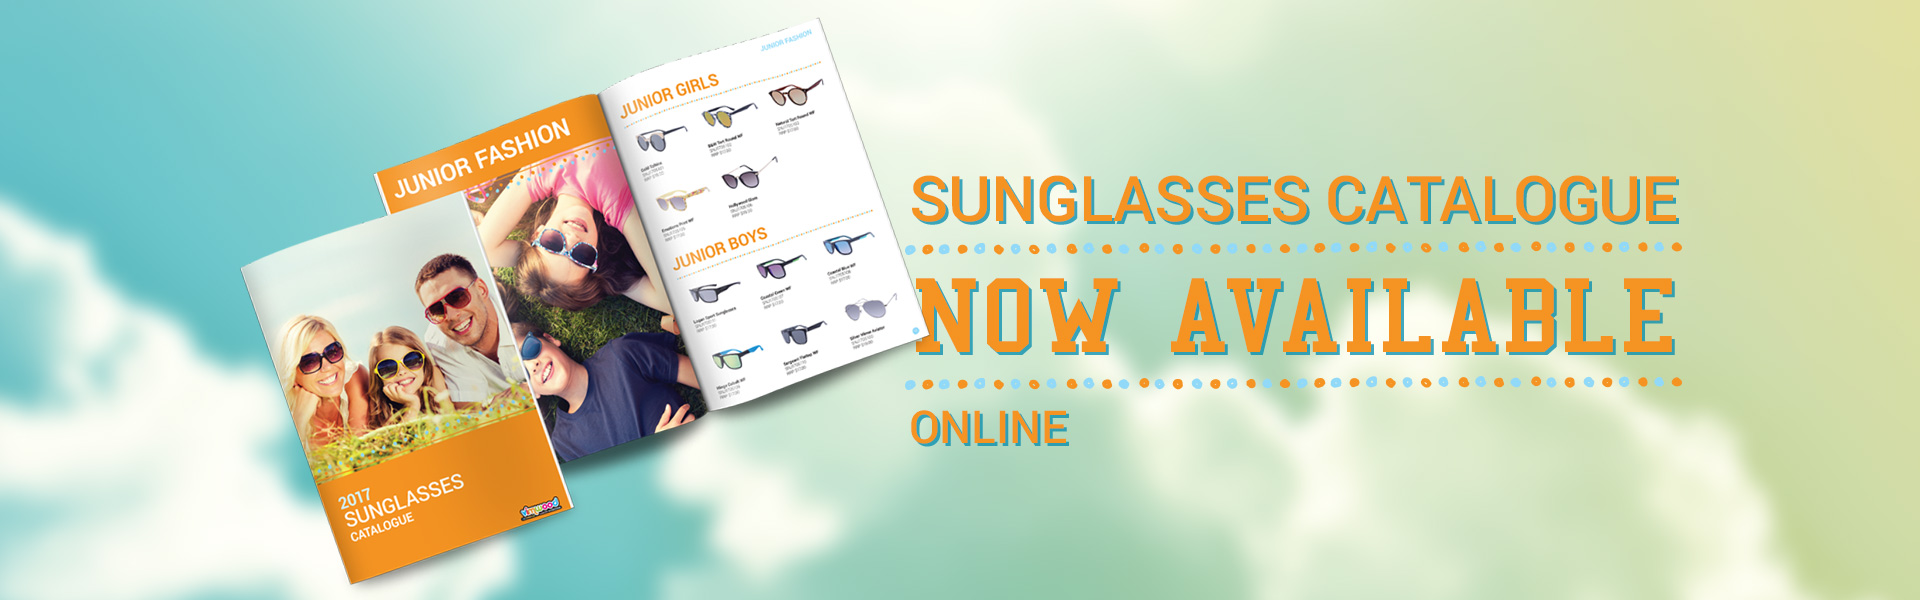 Banner_Sunglasses_Catalogue082017